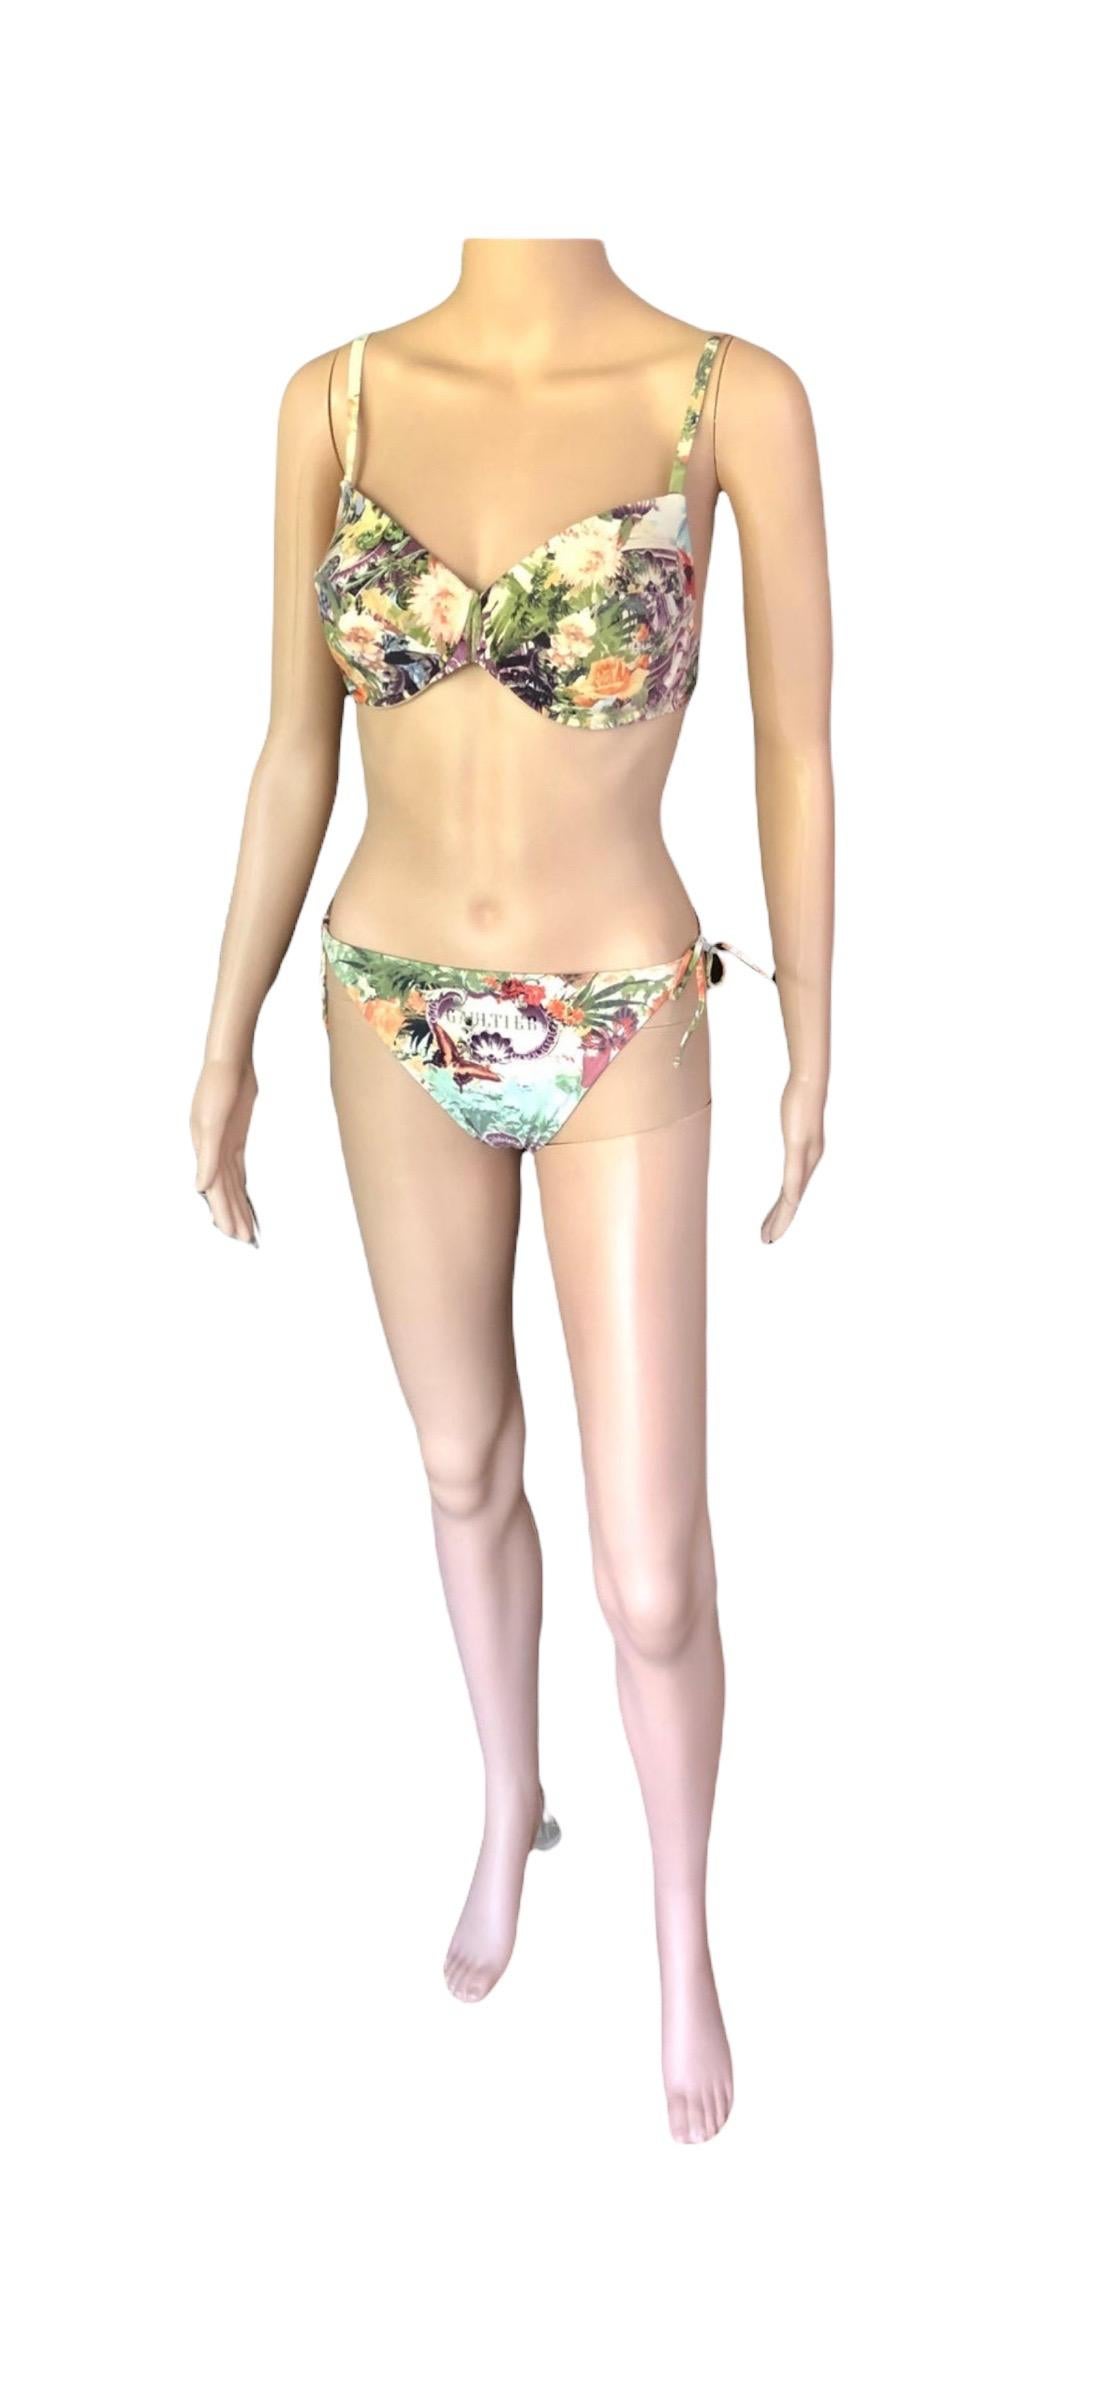 Jean Paul Gaultier Soleil S/S 1999 Flamingo Tropical Bikini Swimsuit 2 Piece Set For Sale 5